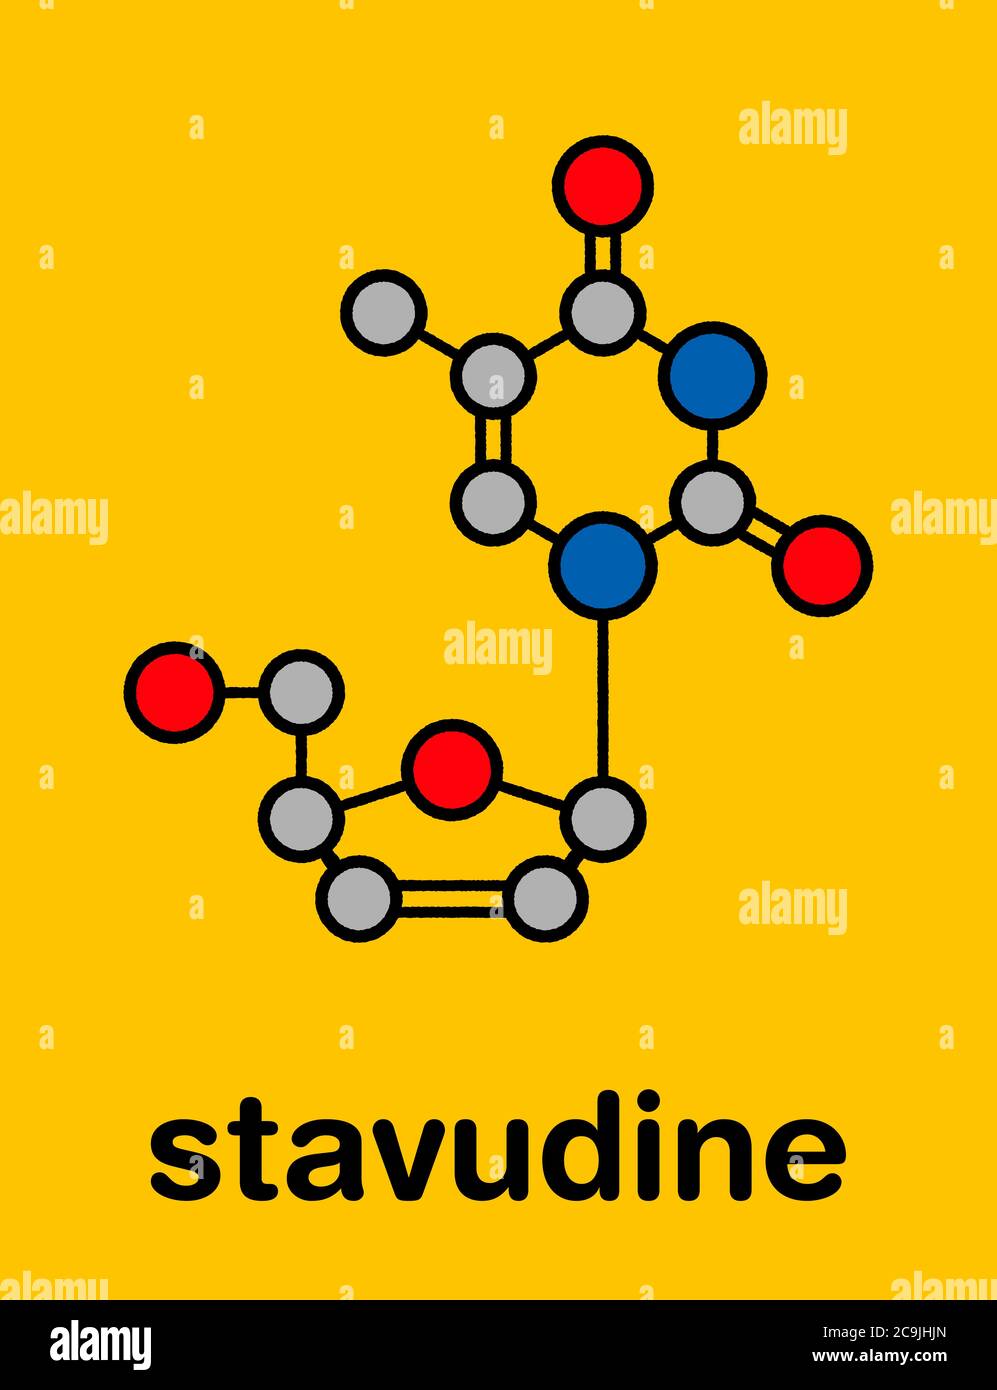 https://c8.alamy.com/comp/2C9JHJN/stavudine-d4t-hiv-drug-molecule-thymidine-analogue-that-blocks-reverse-transcriptase-stylized-skeletal-formula-chemical-structure-atoms-are-sho-2C9JHJN.jpg